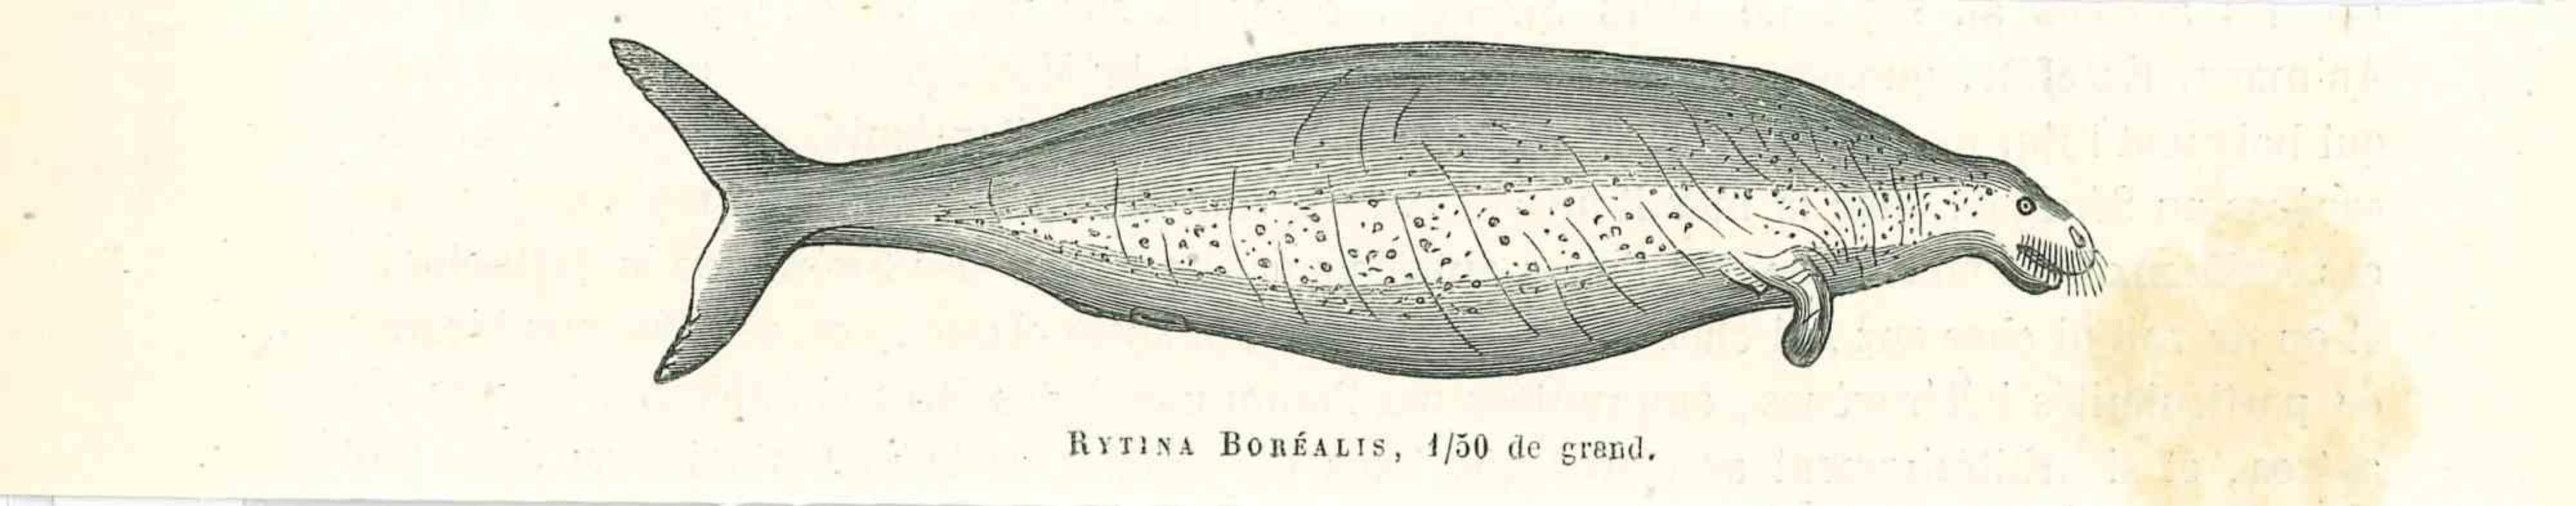 Bytina Borealis - Original Lithograph by Paul Gervais - 1854